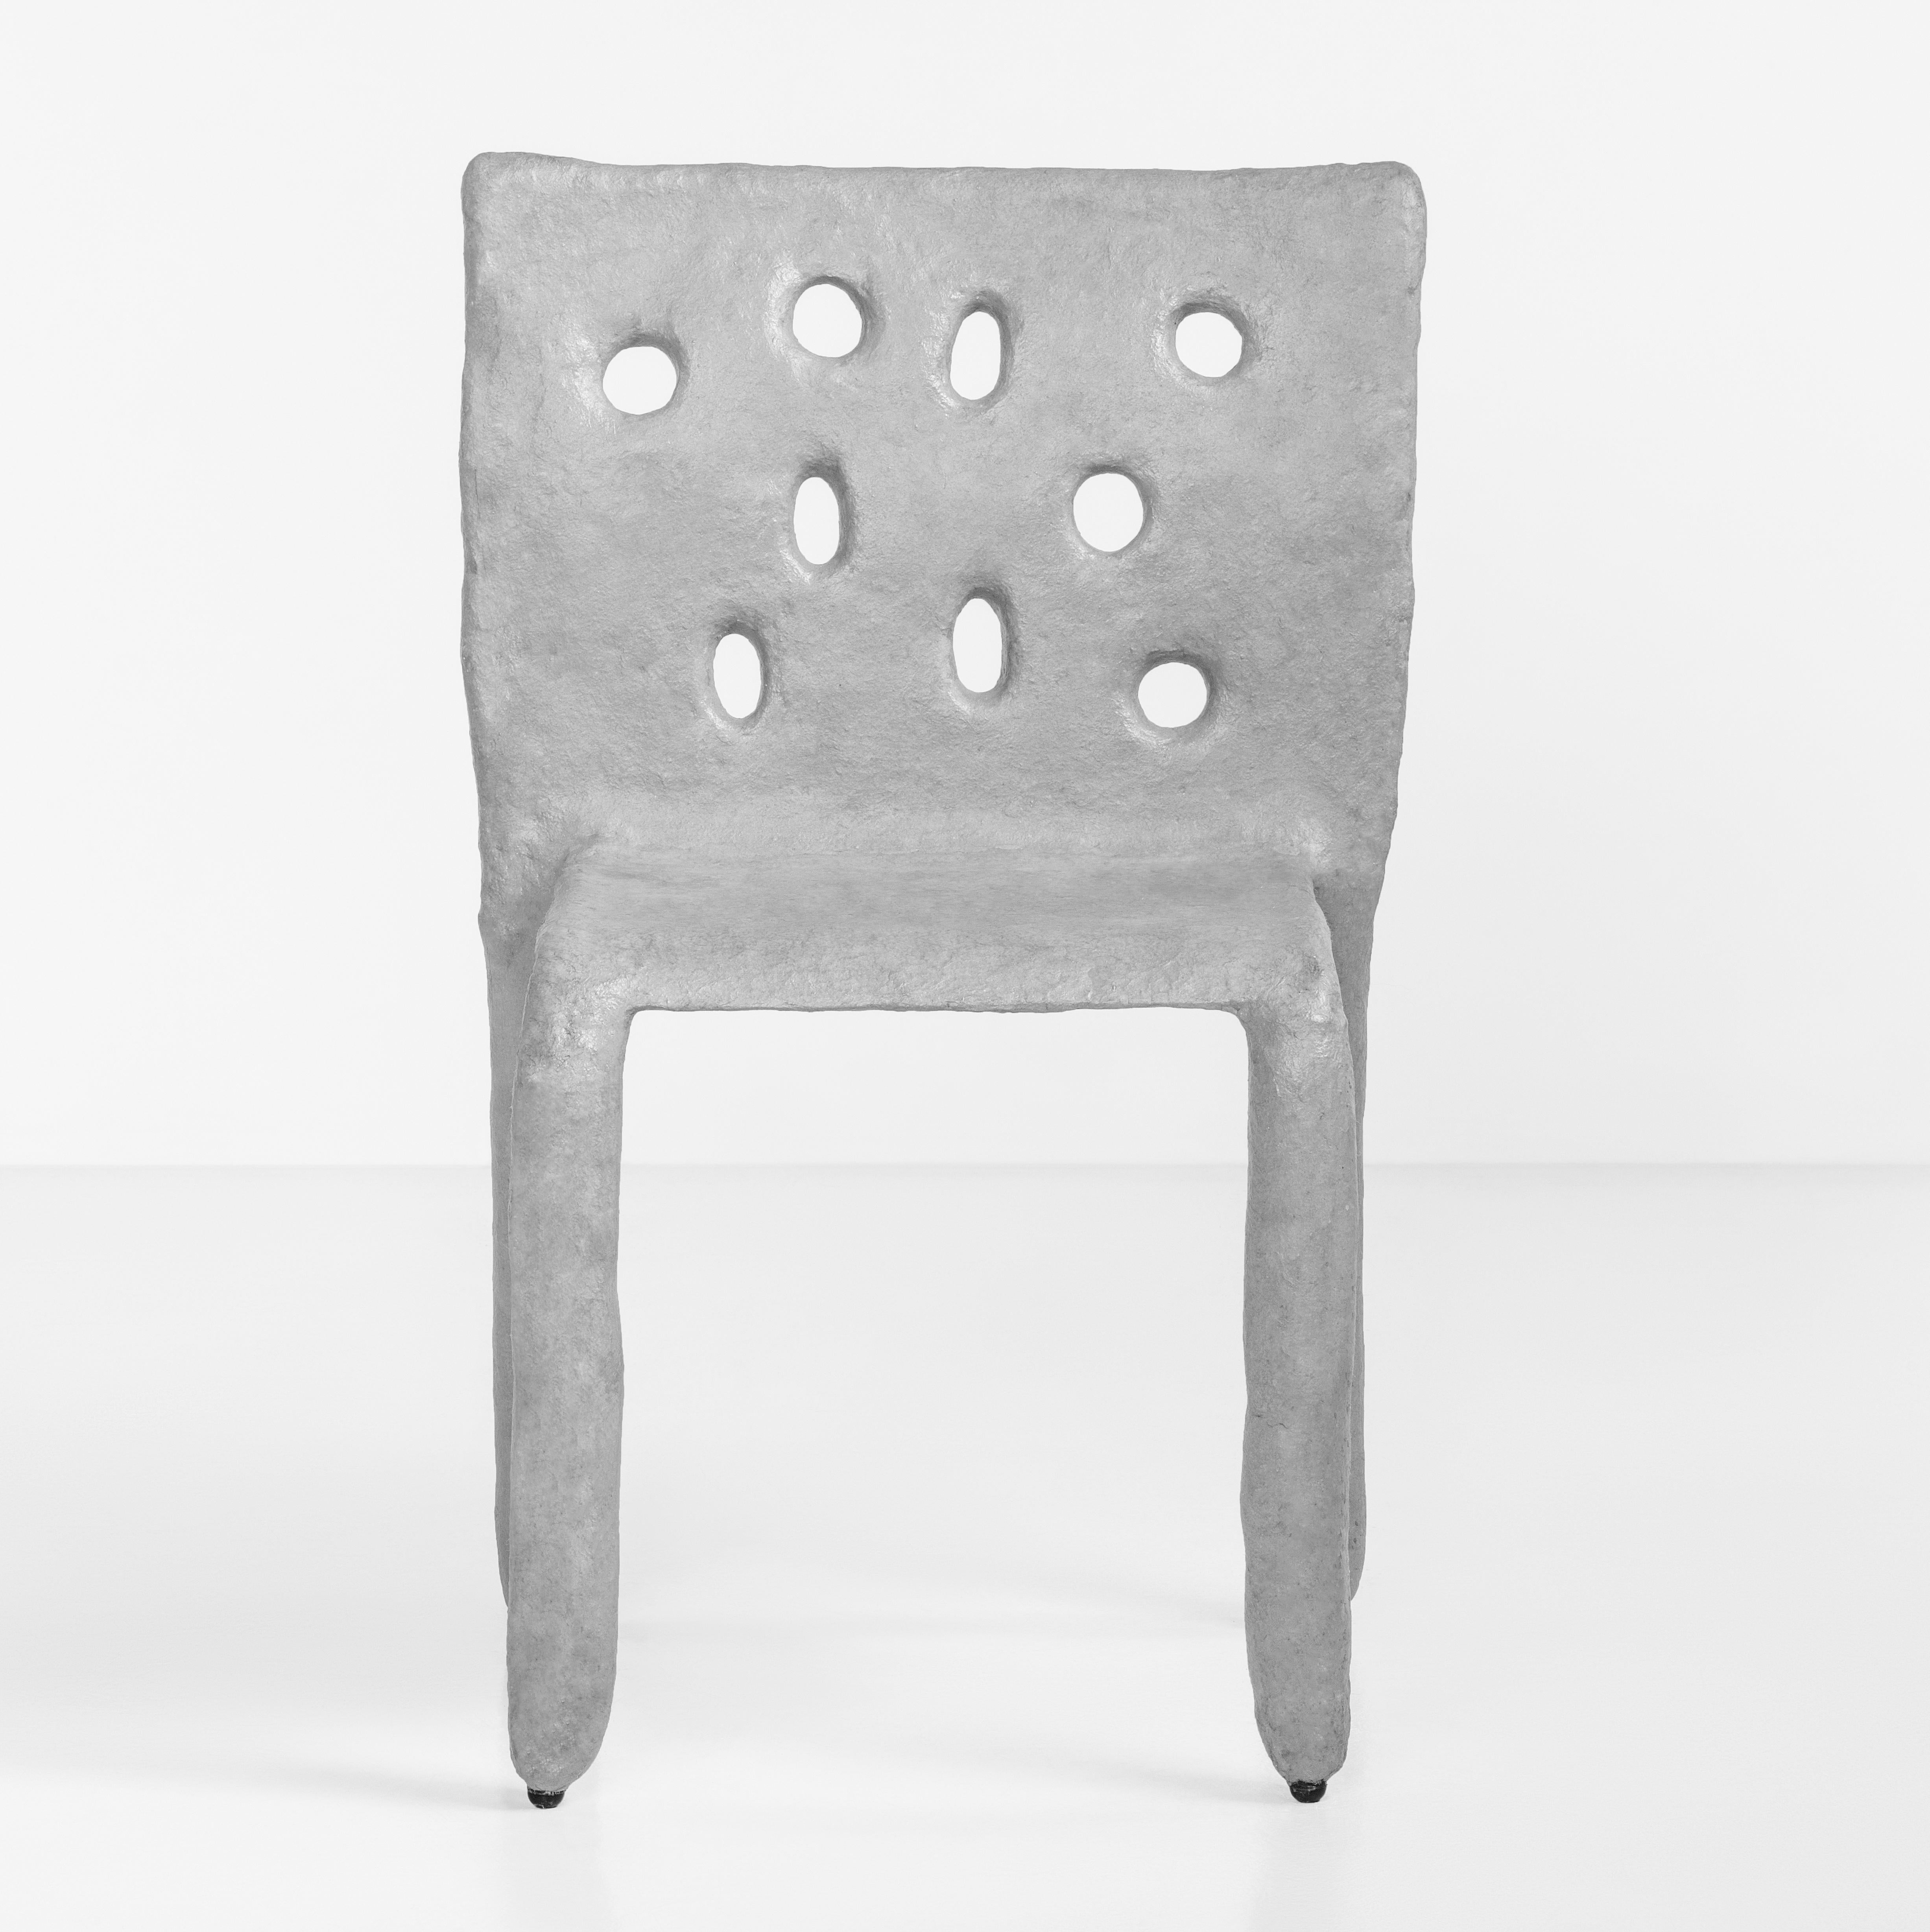 Orange Sculpted Contemporary Chair by FAINA 10